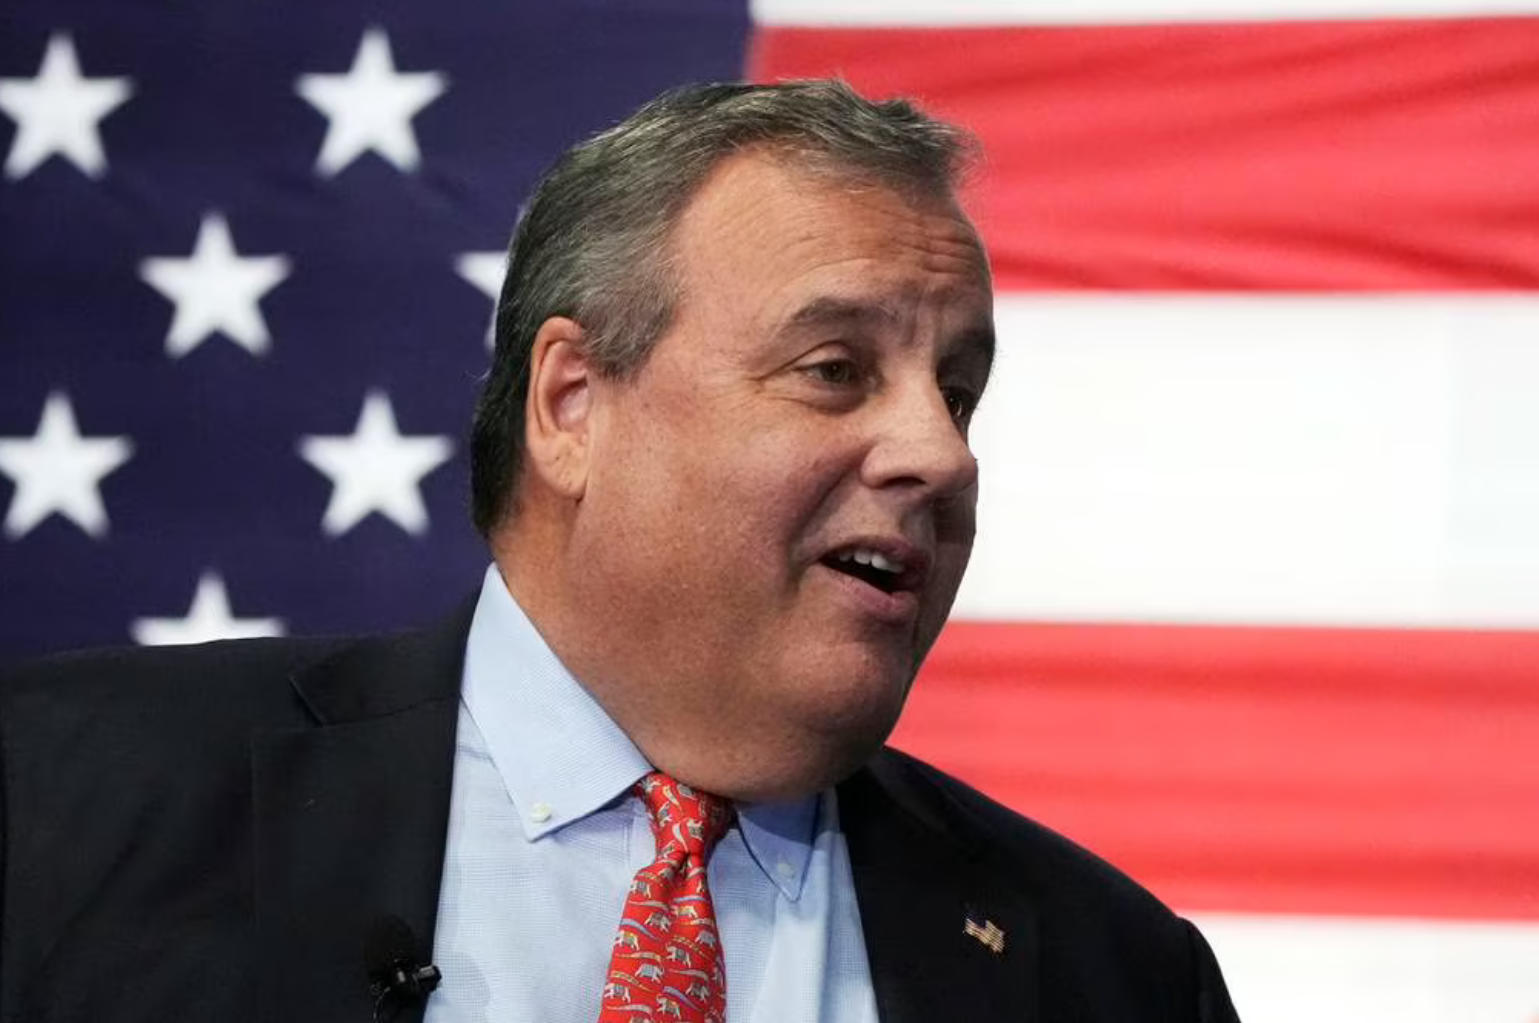 Former New Jersey Gov. Christie kicks off 2024 Republican presidential bid with swipes at Trump